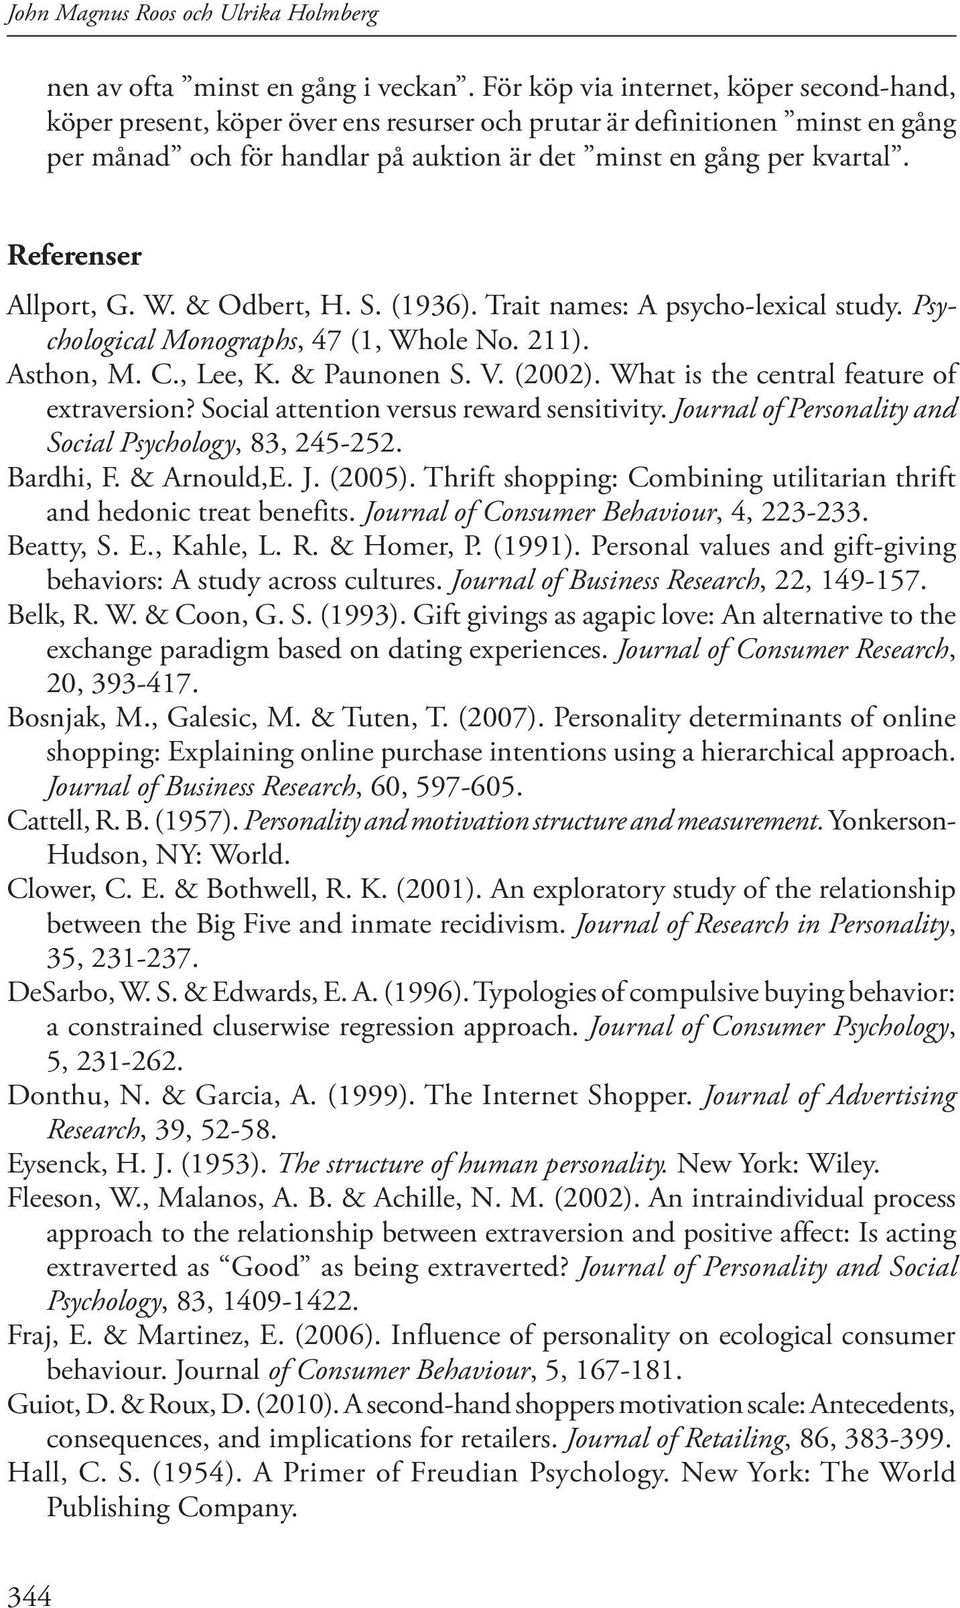 Referenser Allport, G. W. & Odbert, H. S. (1936). Trait names: A psycho-lexical study. Psychological Monographs, 47 (1, Whole No. 211). Asthon, M. C., Lee, K. & Paunonen S. V. (2002).